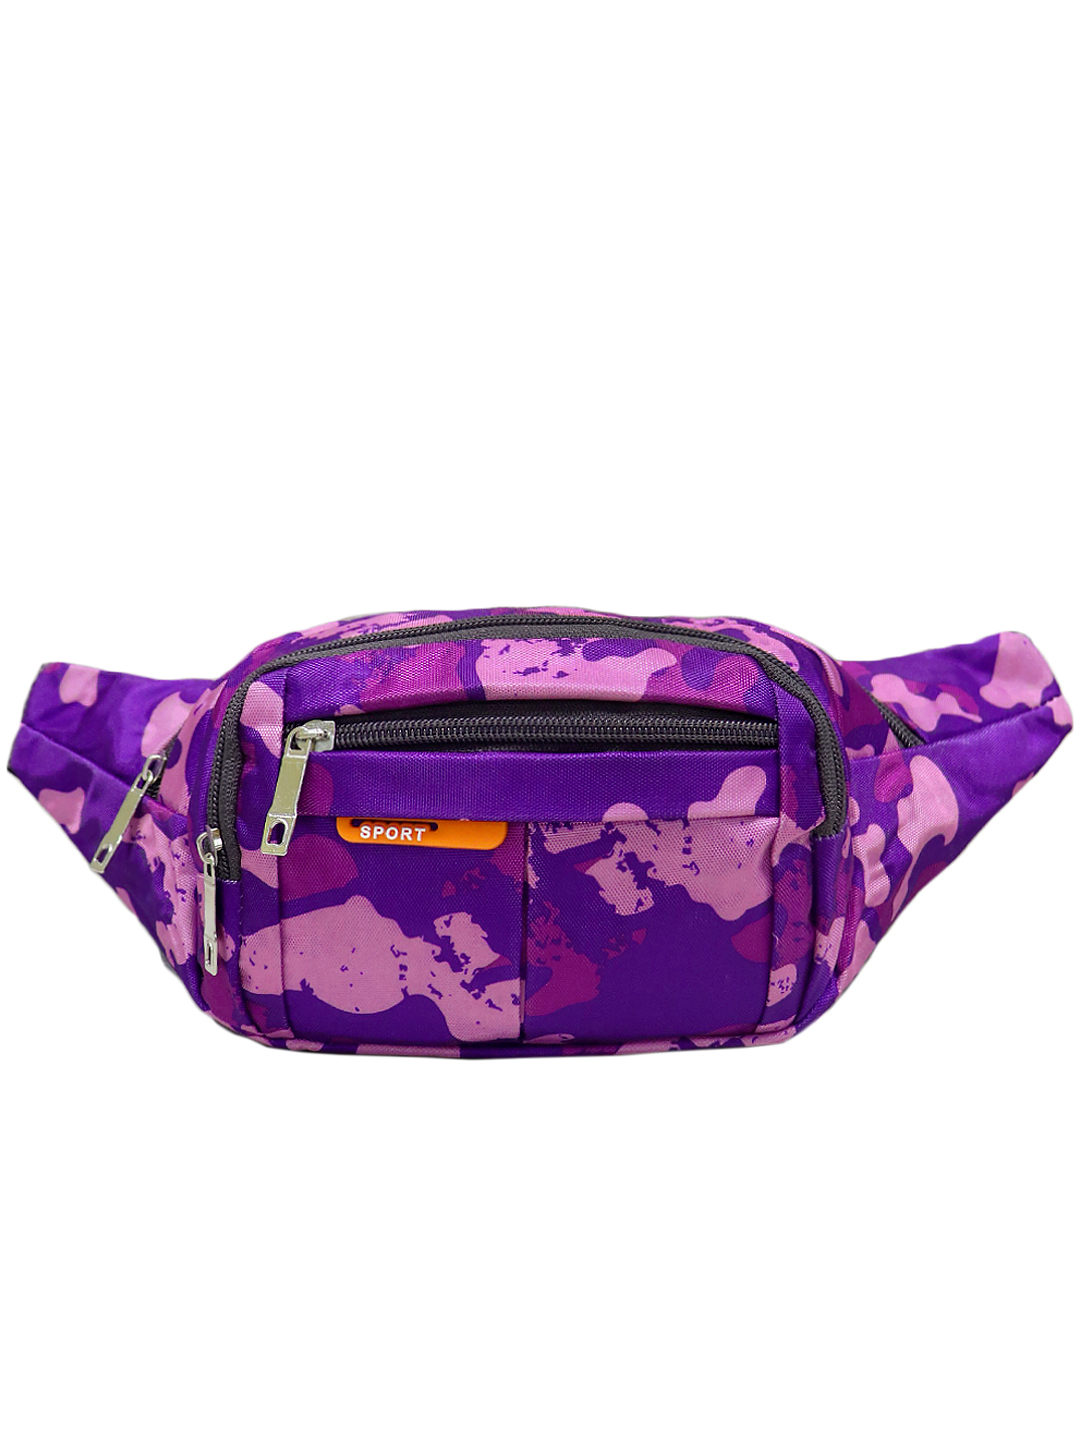 Поясная сумка мужская Crystel Eden 1-117, фиолетовый